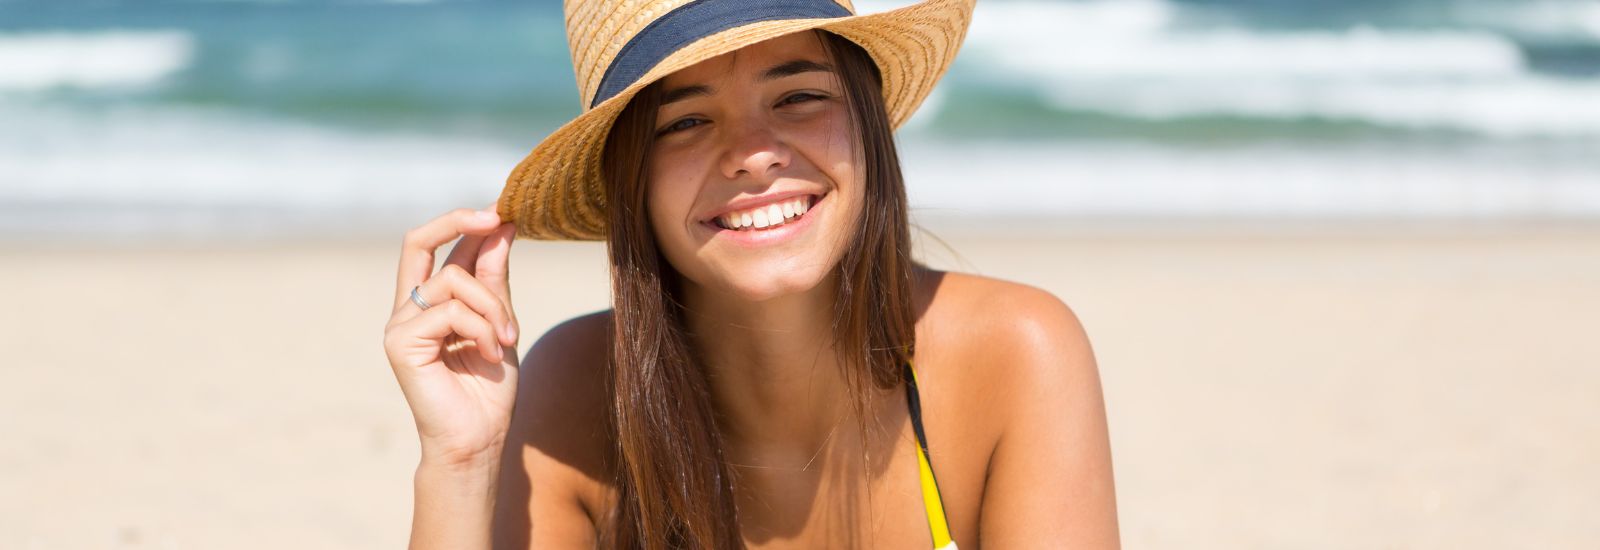 Beautiful girl smiling in a beach